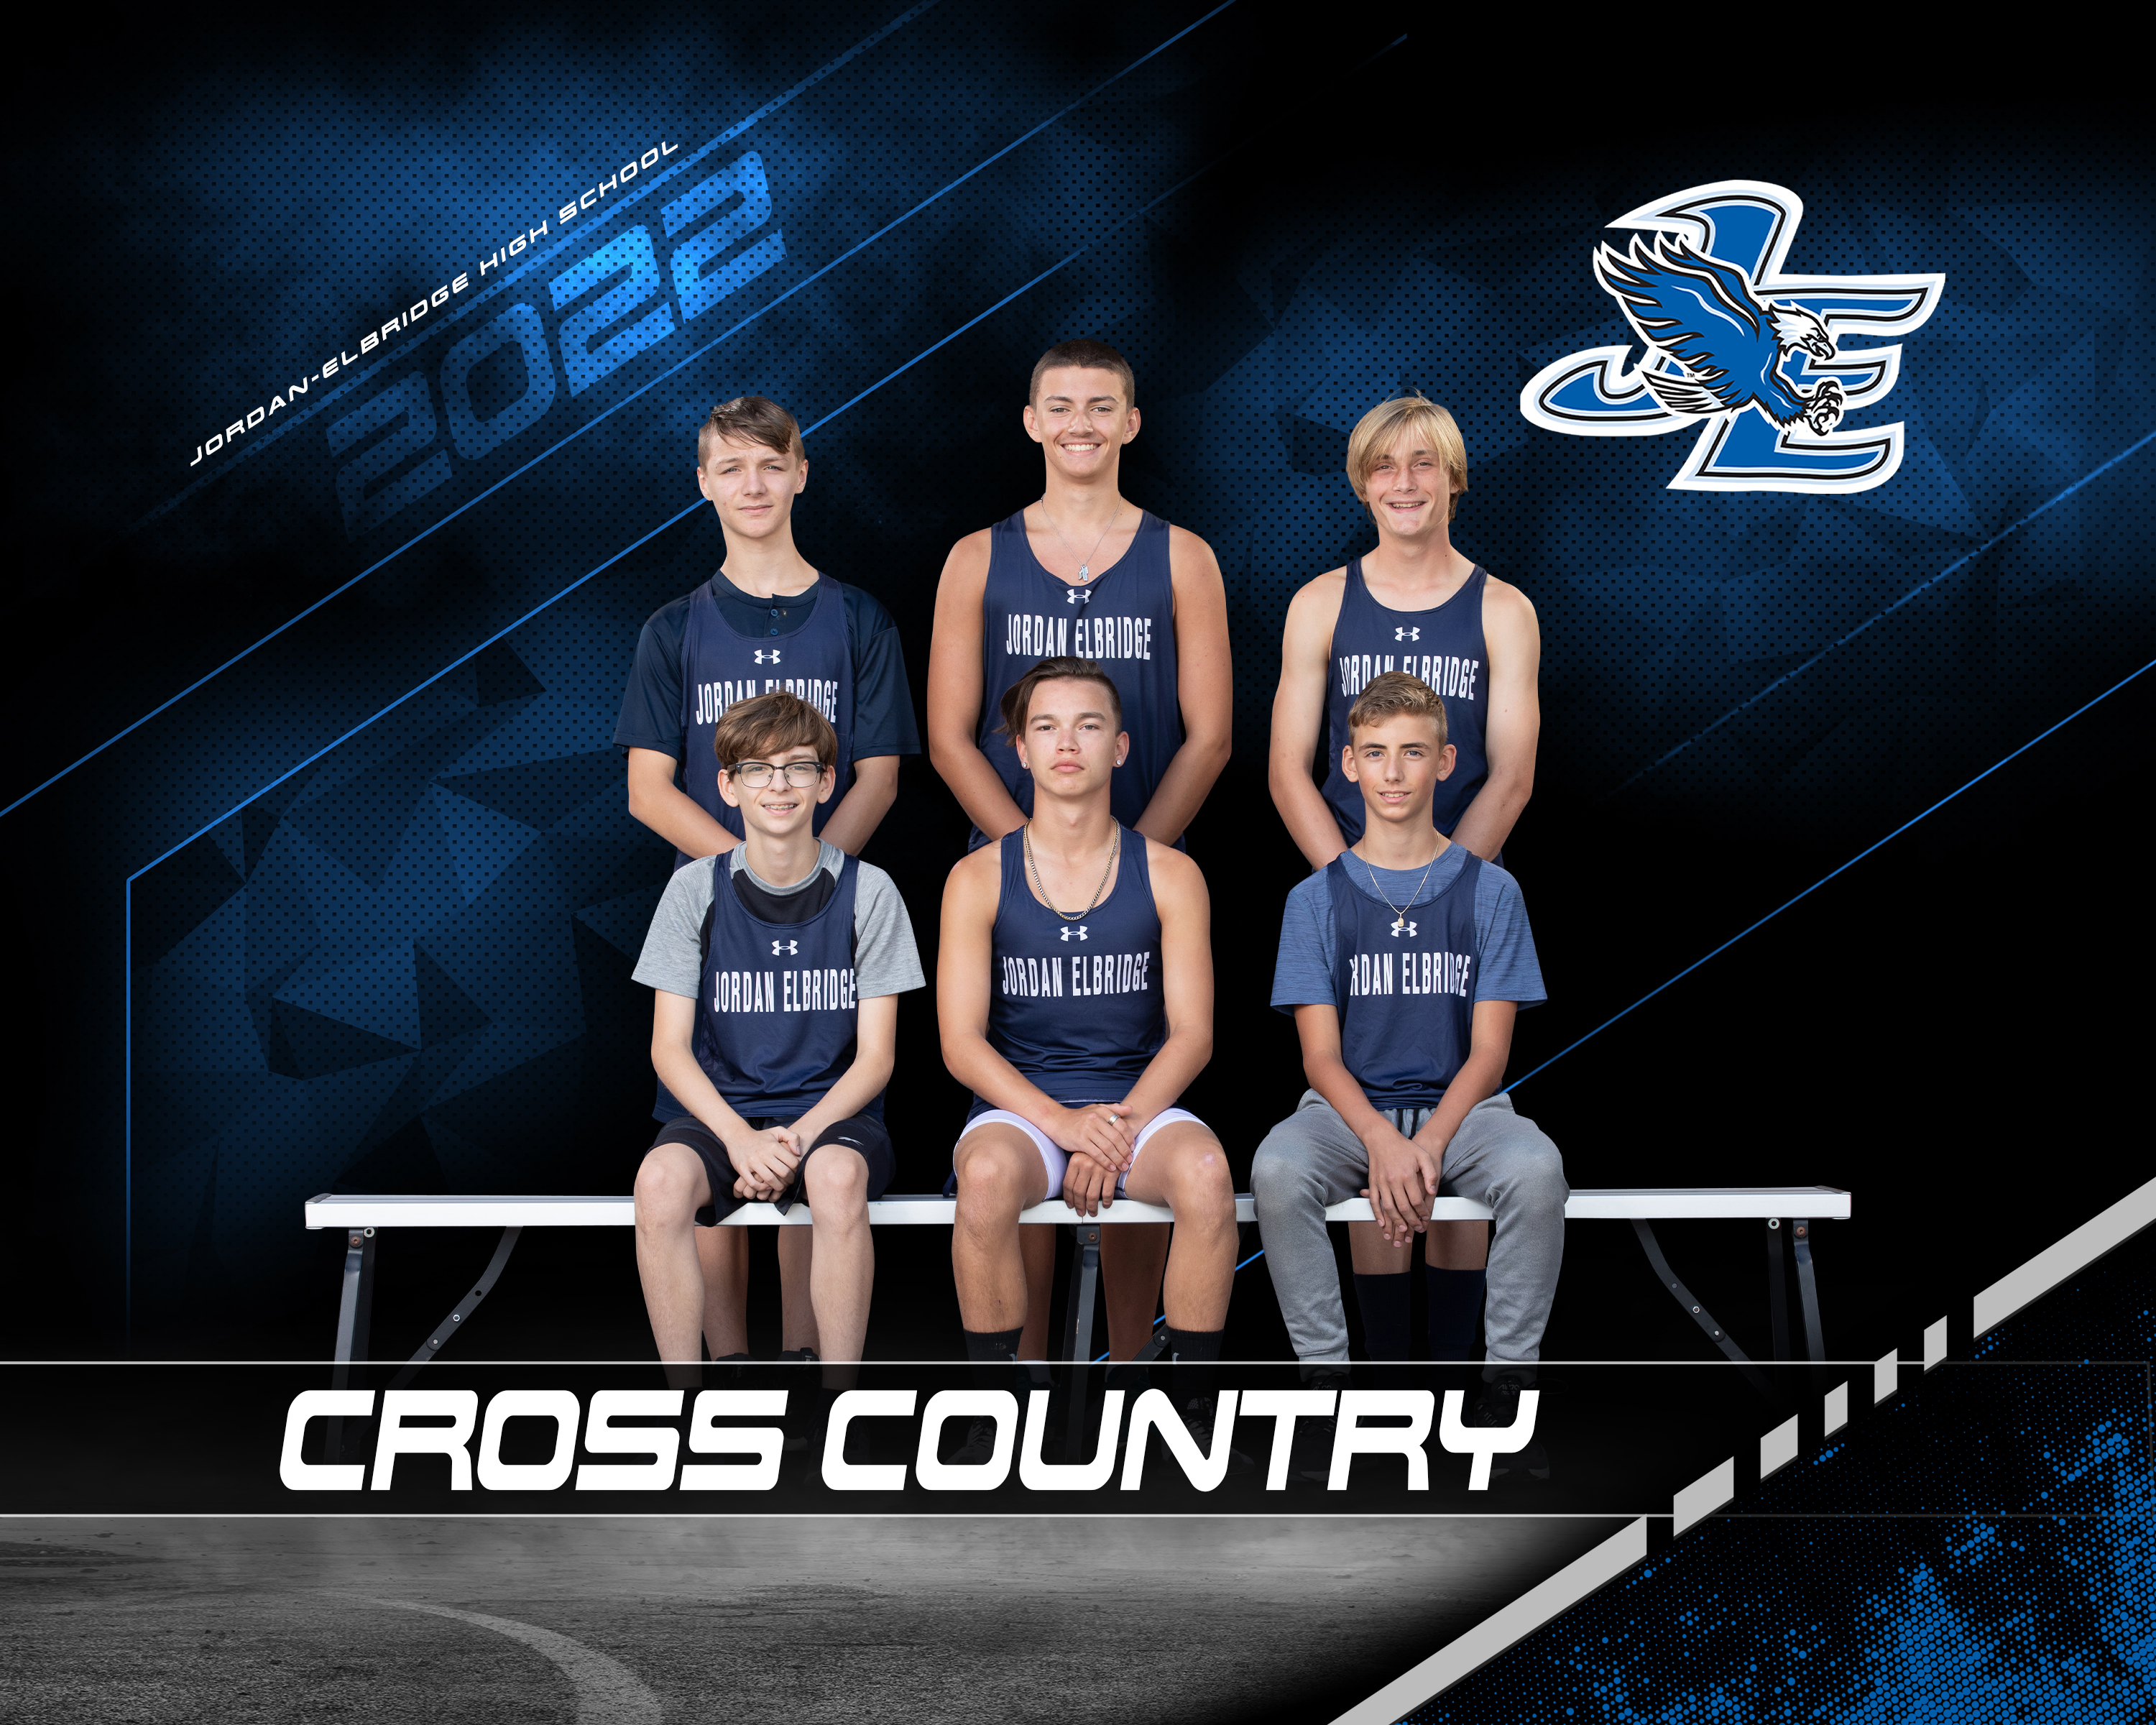 The varsity boys cross country team is a scholar-athlete team